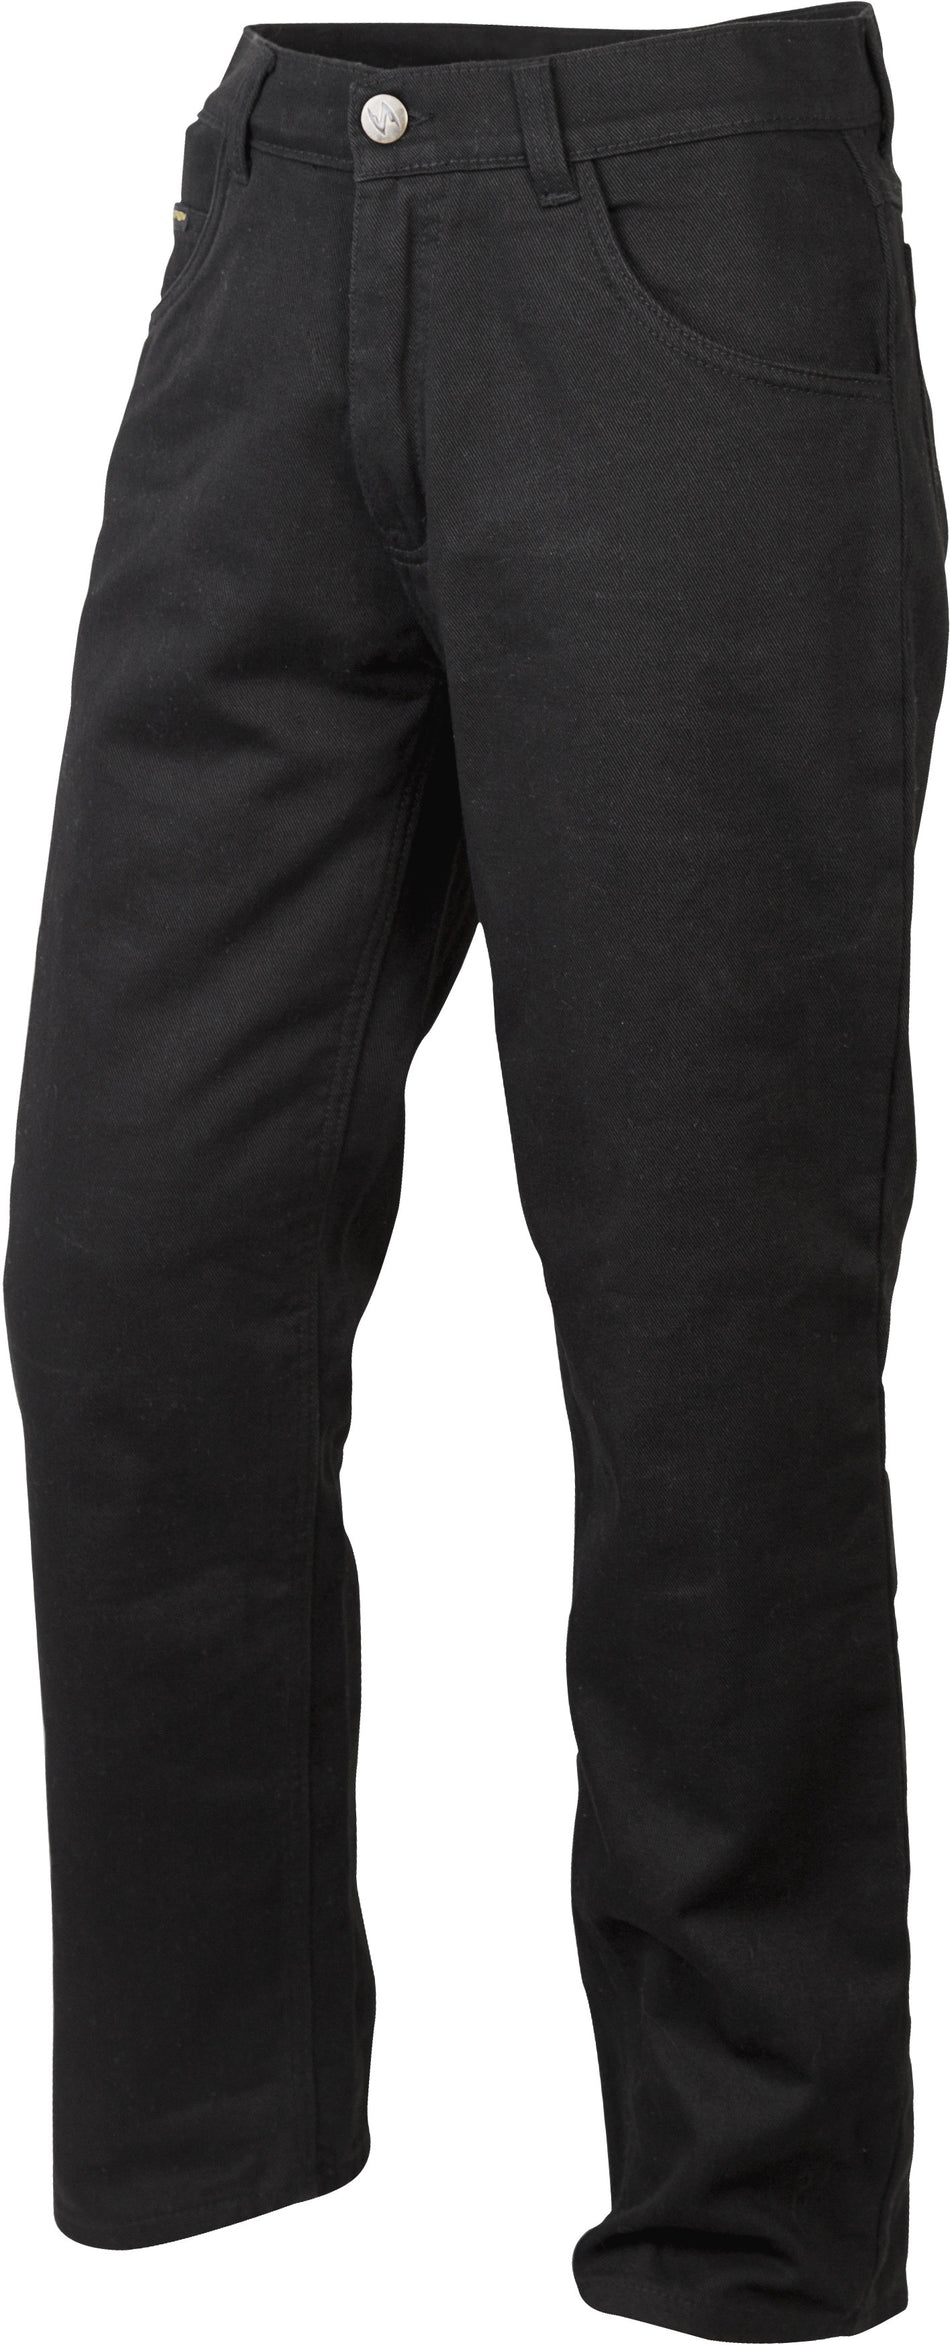 SCORPION EXO Covert Jeans Black Size 36 2503-36